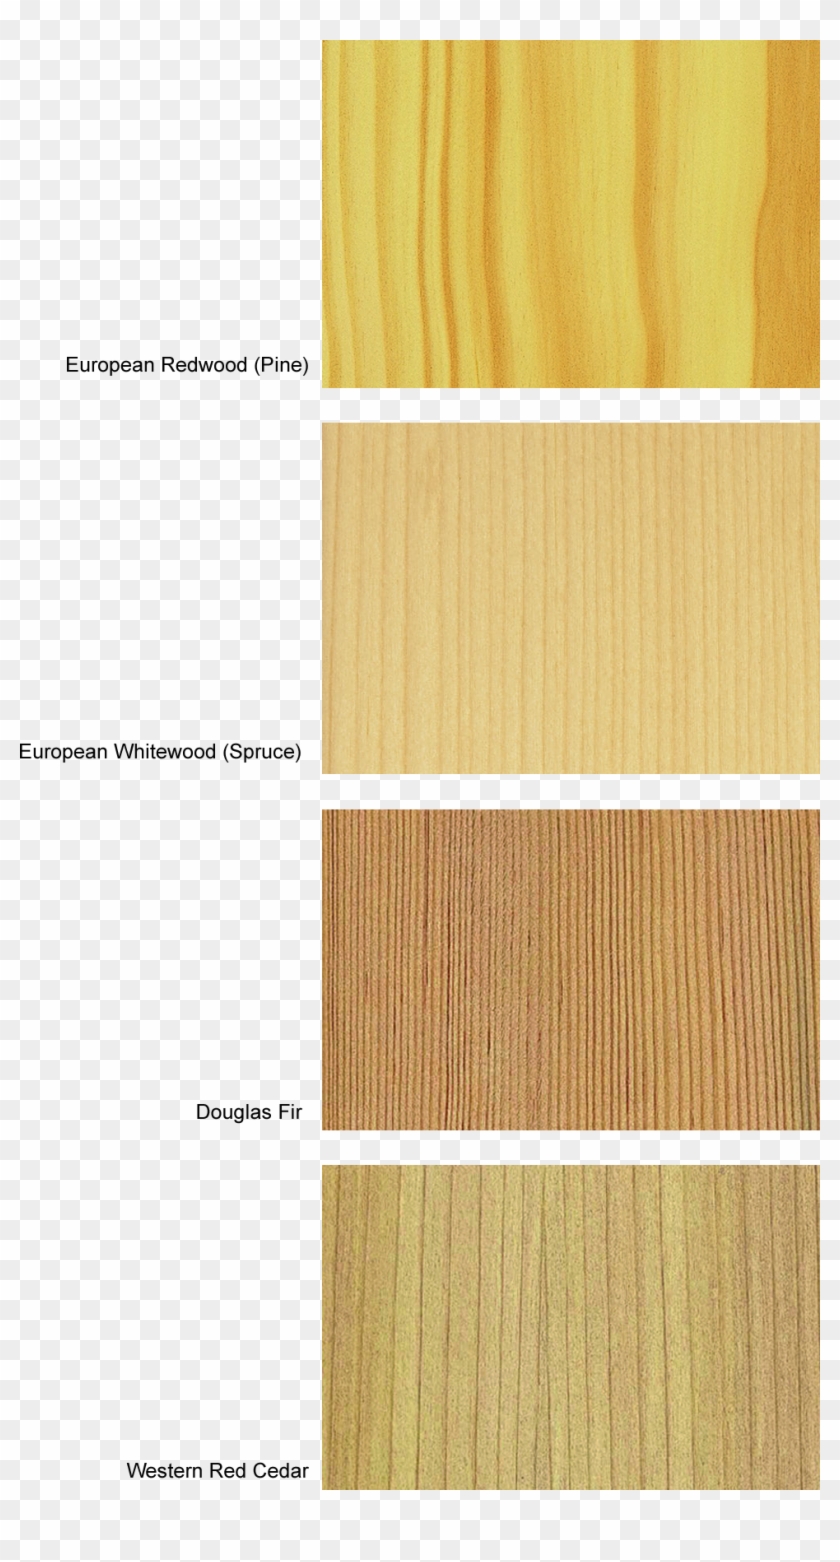 Timber Species Choosing Wood - European Redwood Clipart #5166702